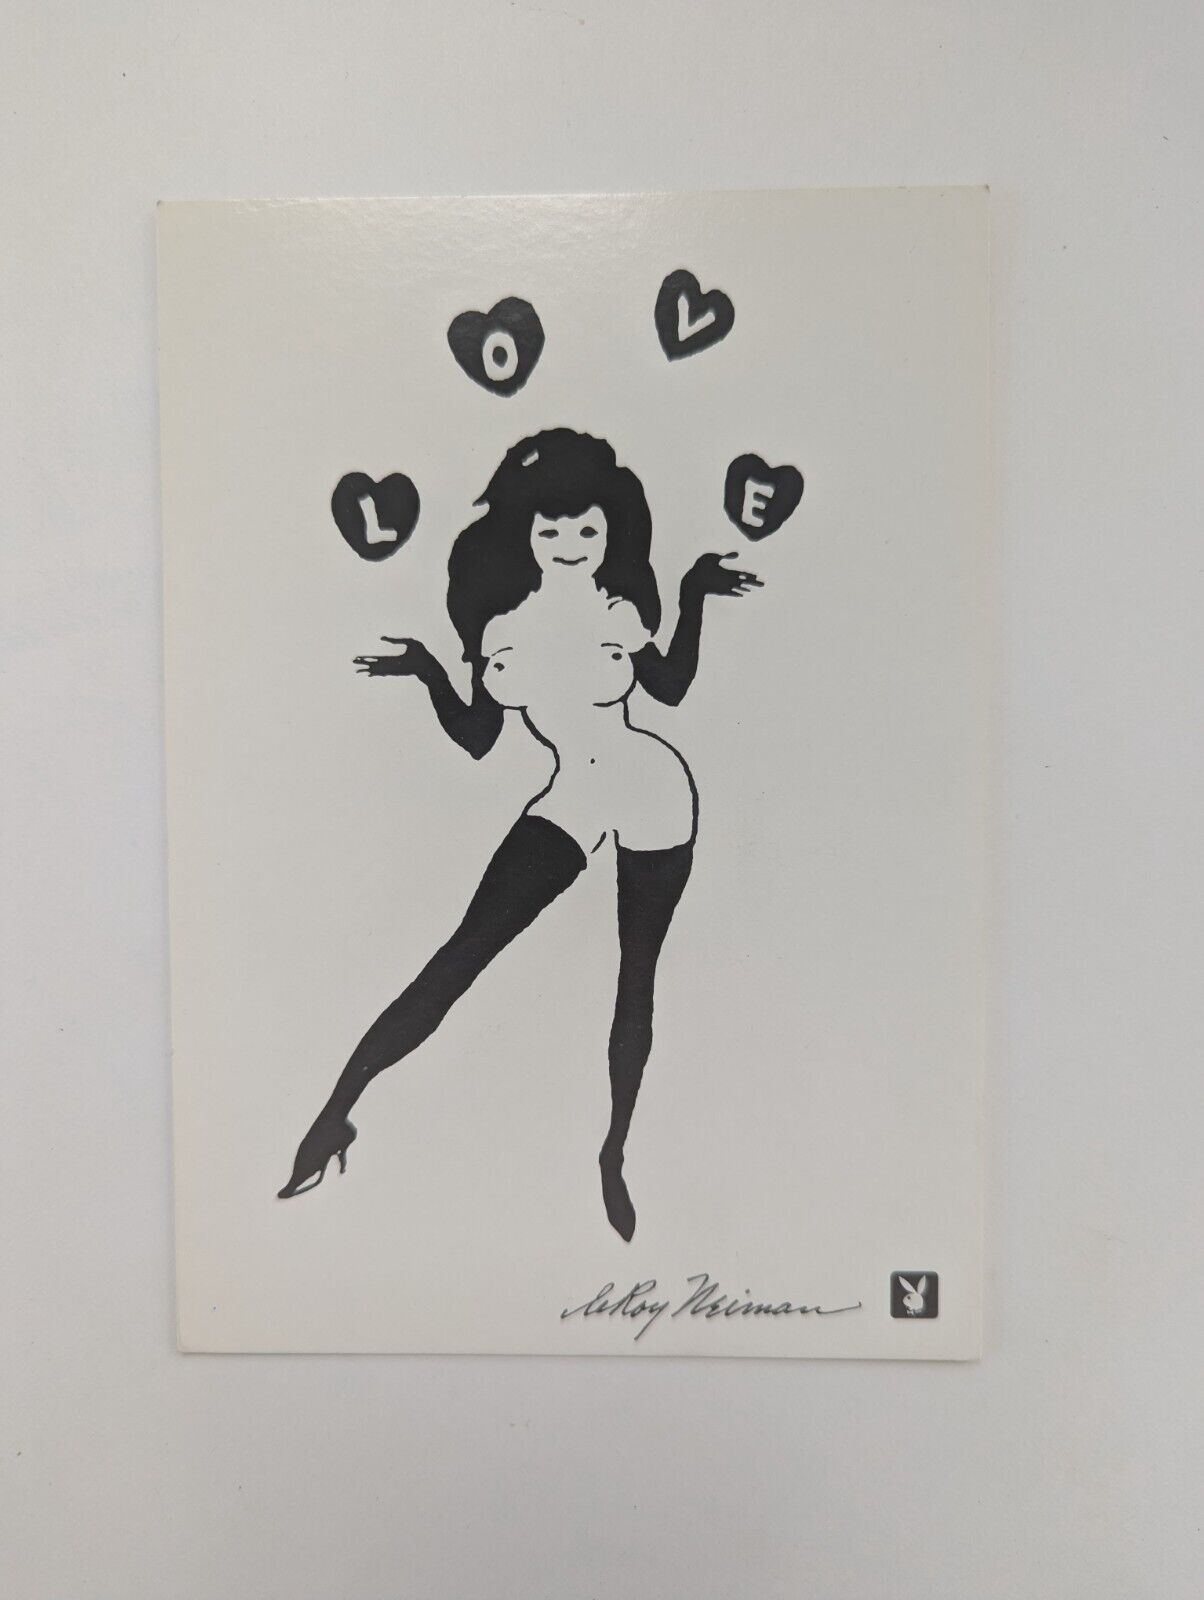 LeRoy Neiman Artist Playboy Magazine promo Post Card 1995 40 years of Playboy